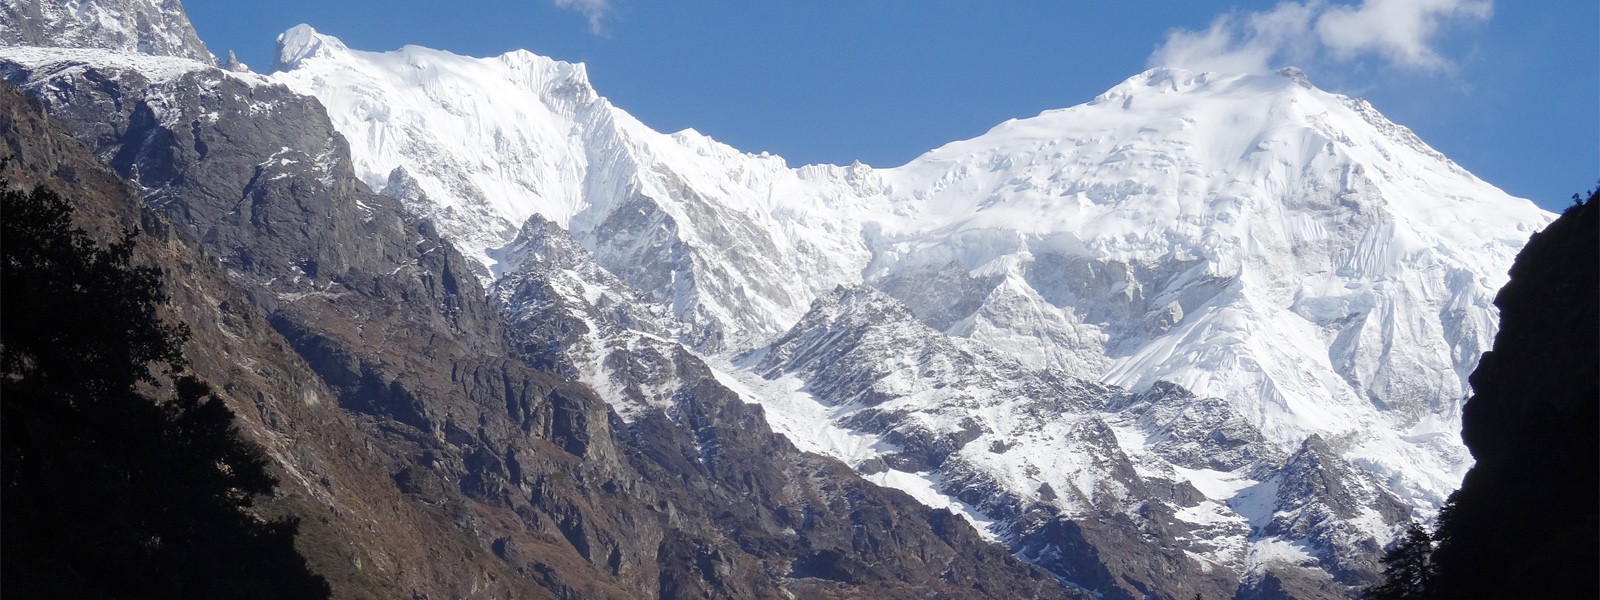 Mt. Langtang Lirung Climbing - Langtang Region, Nepal